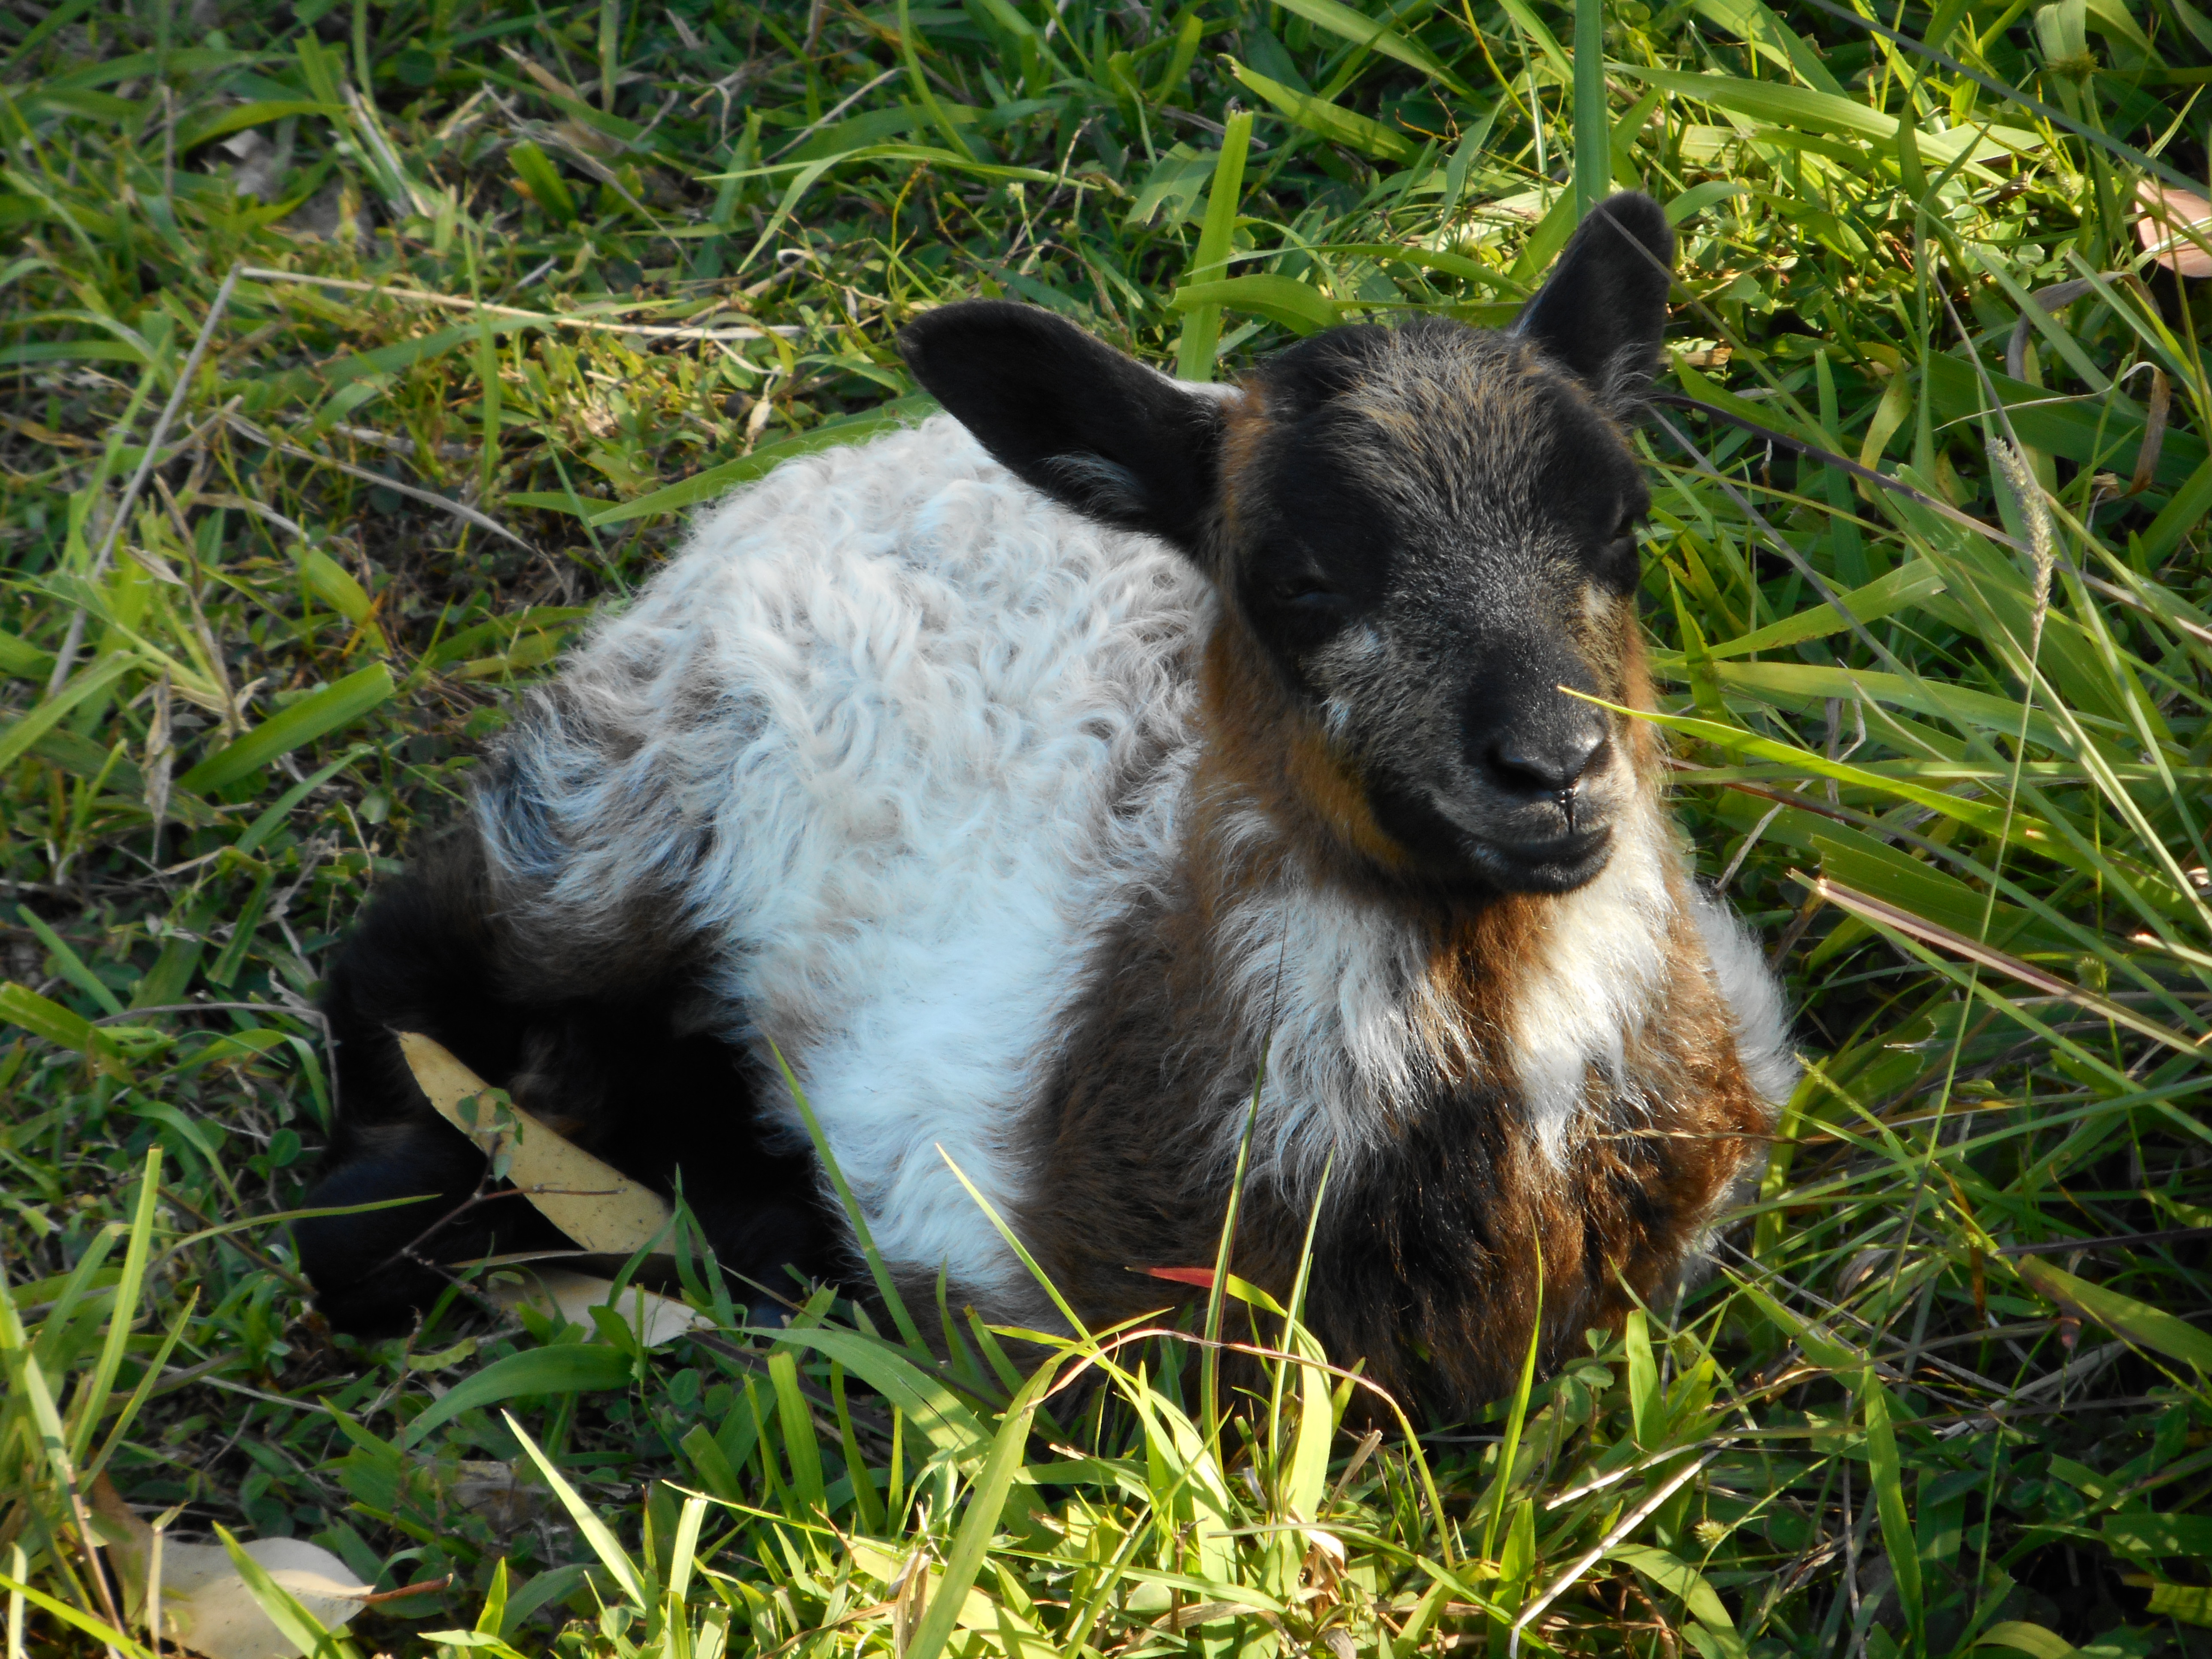 1st born lamb laying down